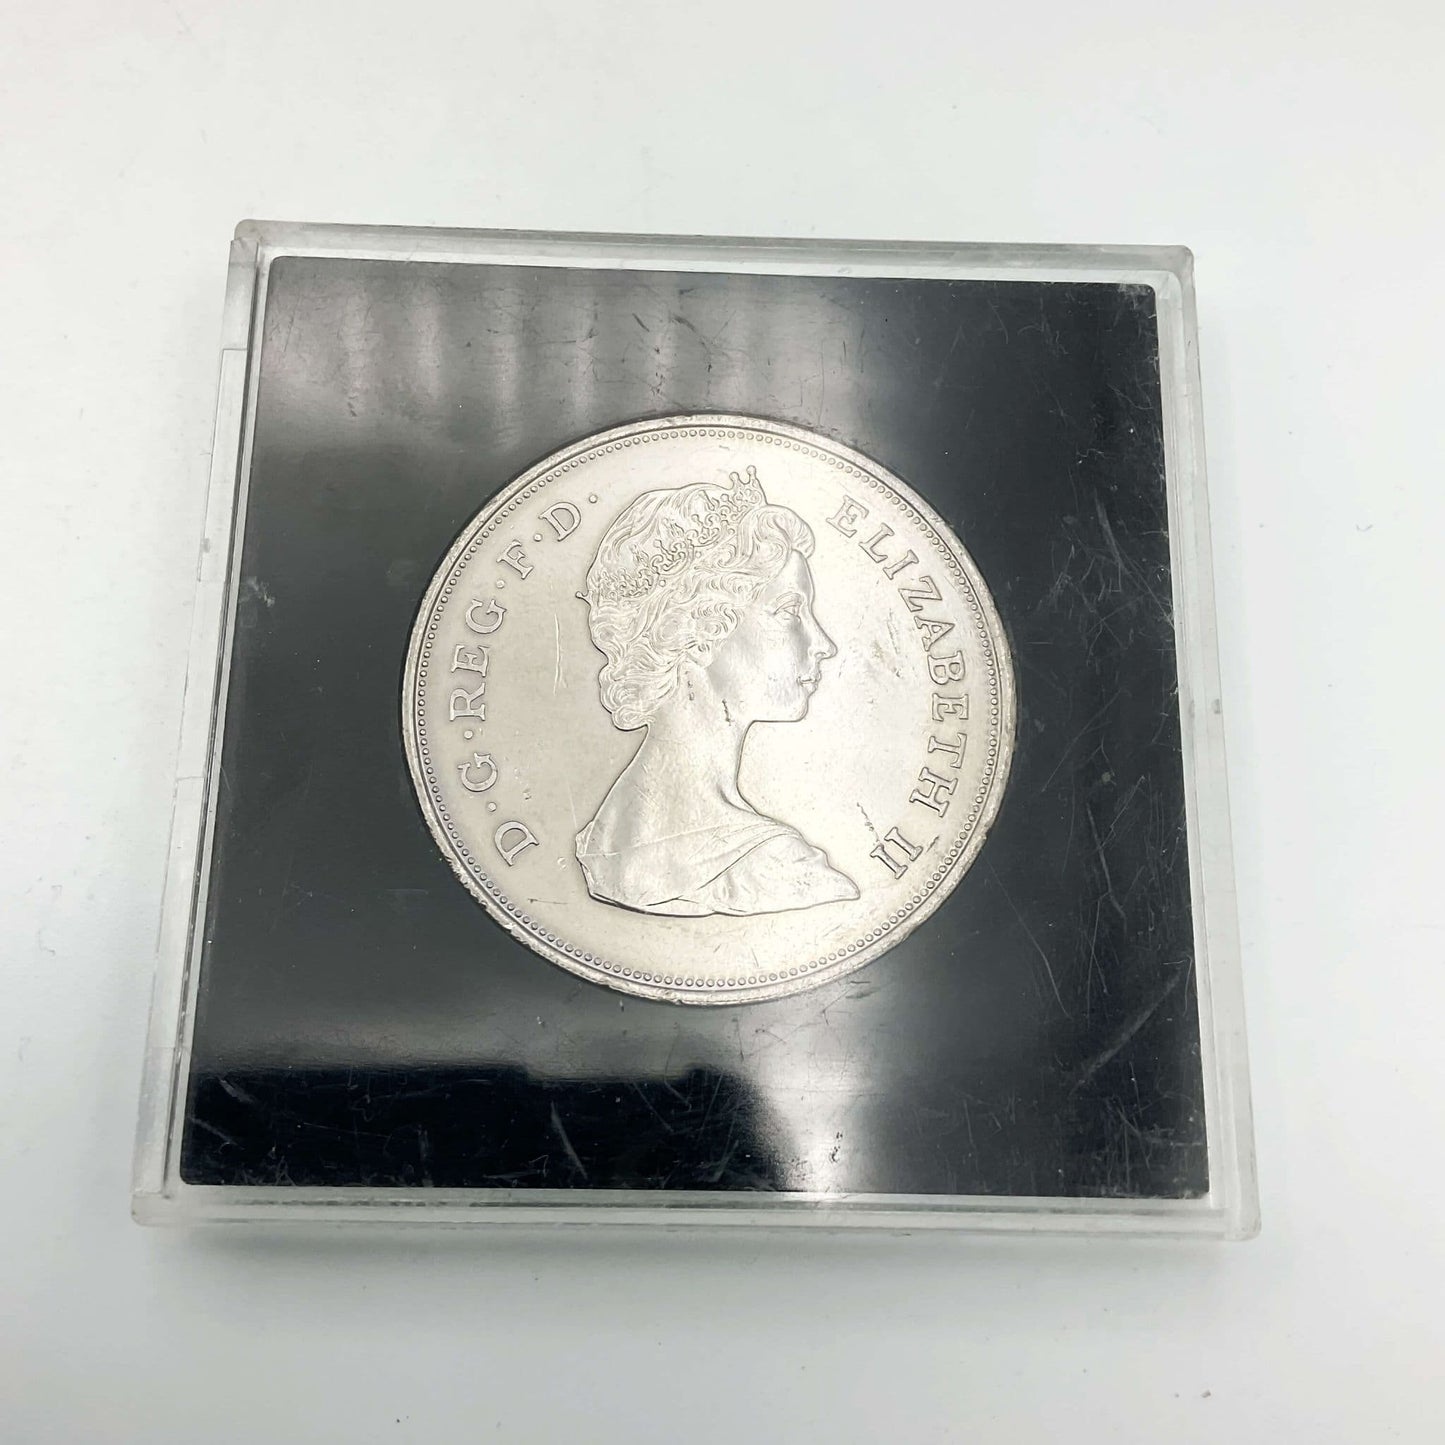 1980 Queen Mothers Birthday Commemorative Coin